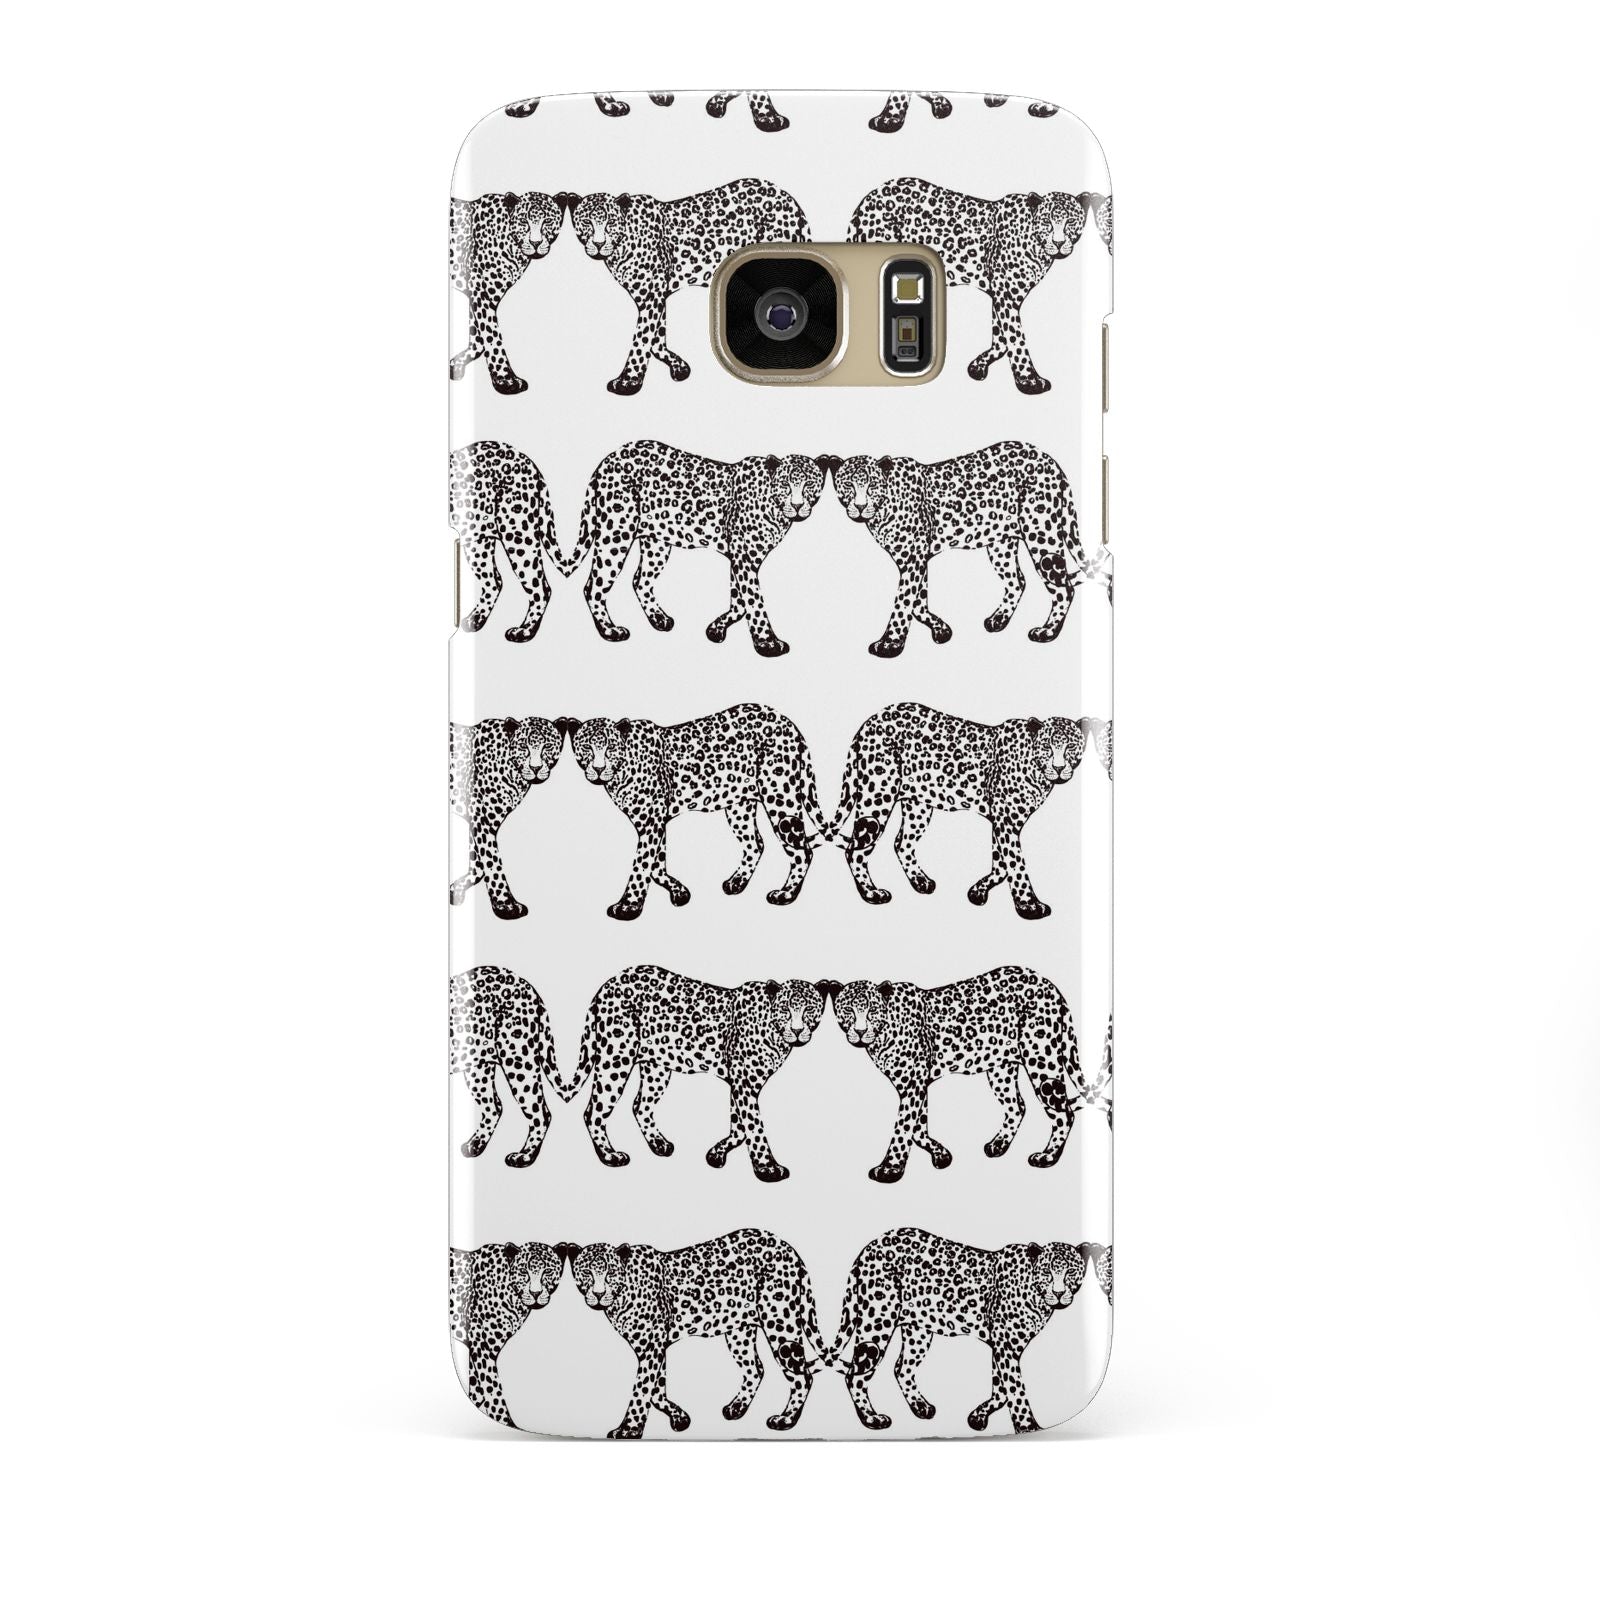 Monochrome Mirrored Leopard Print Samsung Galaxy S7 Edge Case